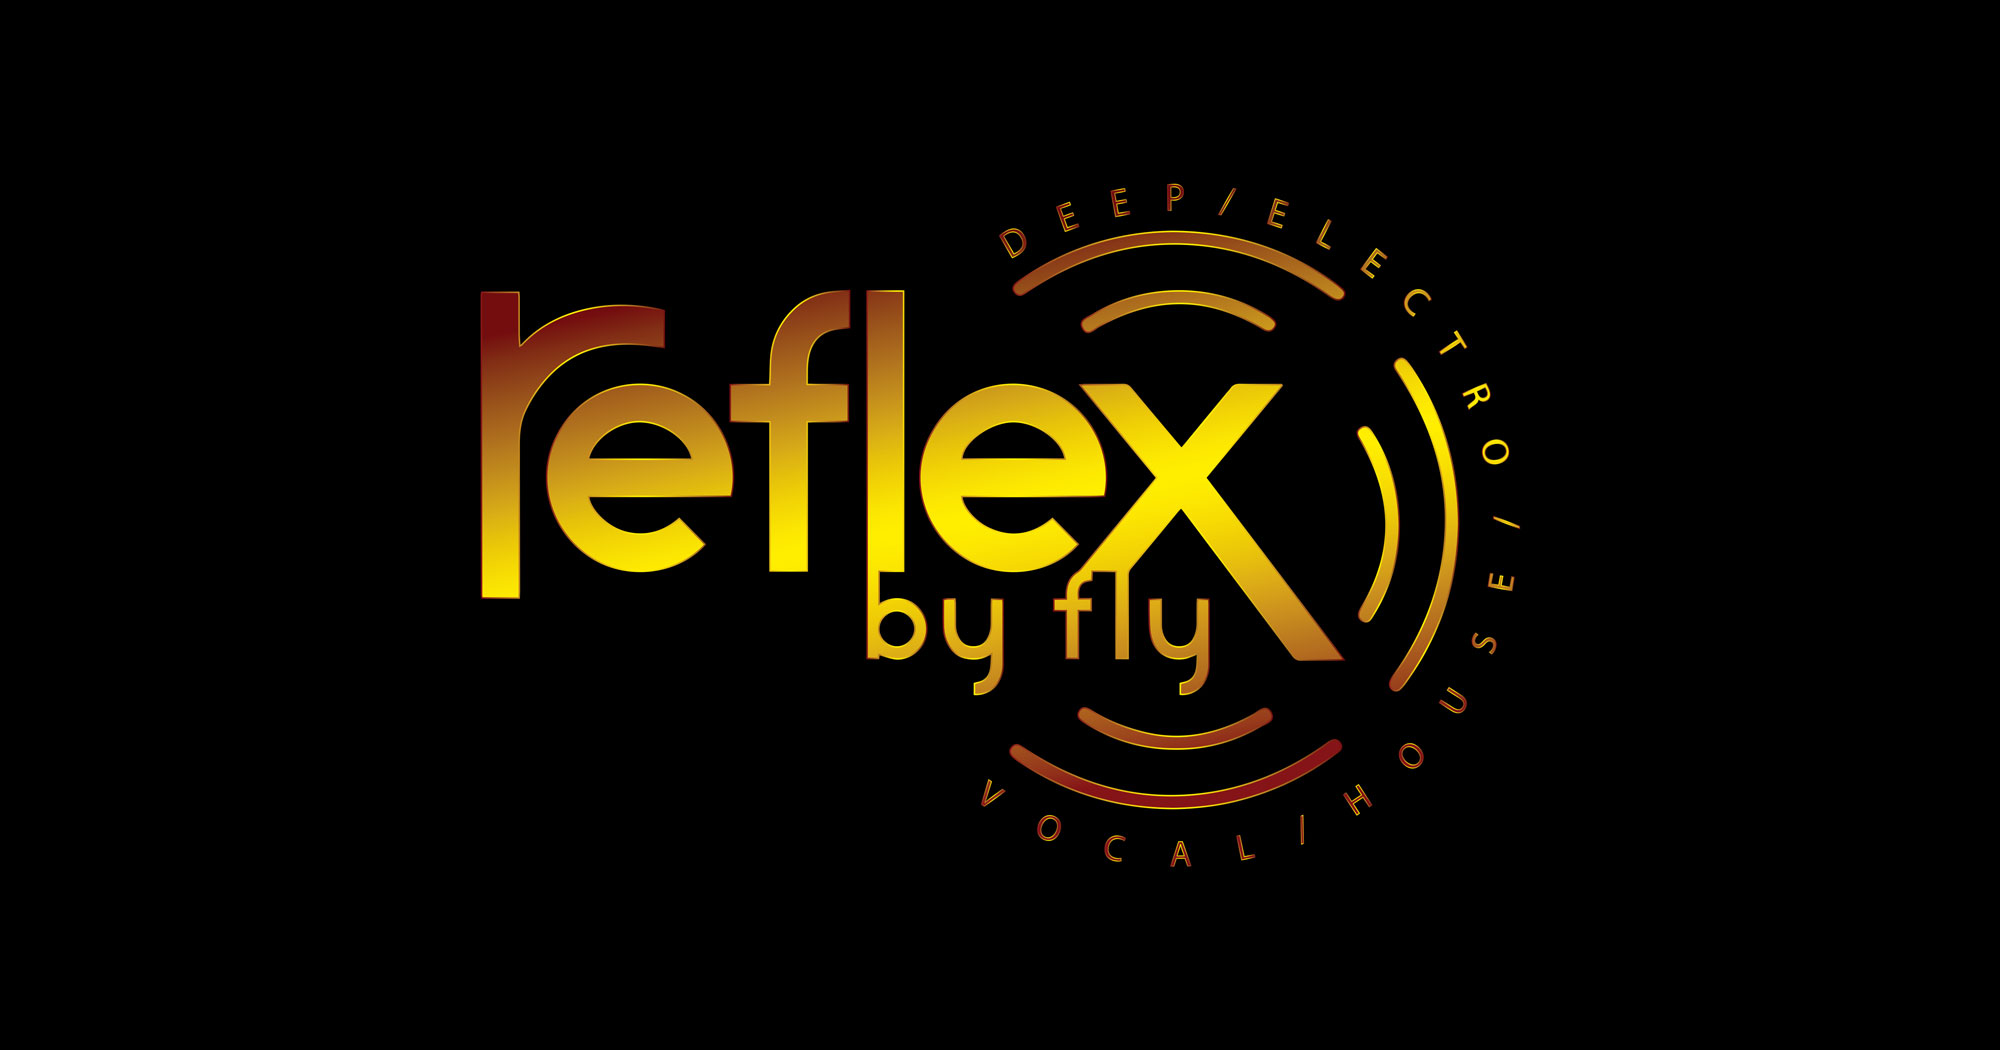 (c) Reflex-by-fly.com